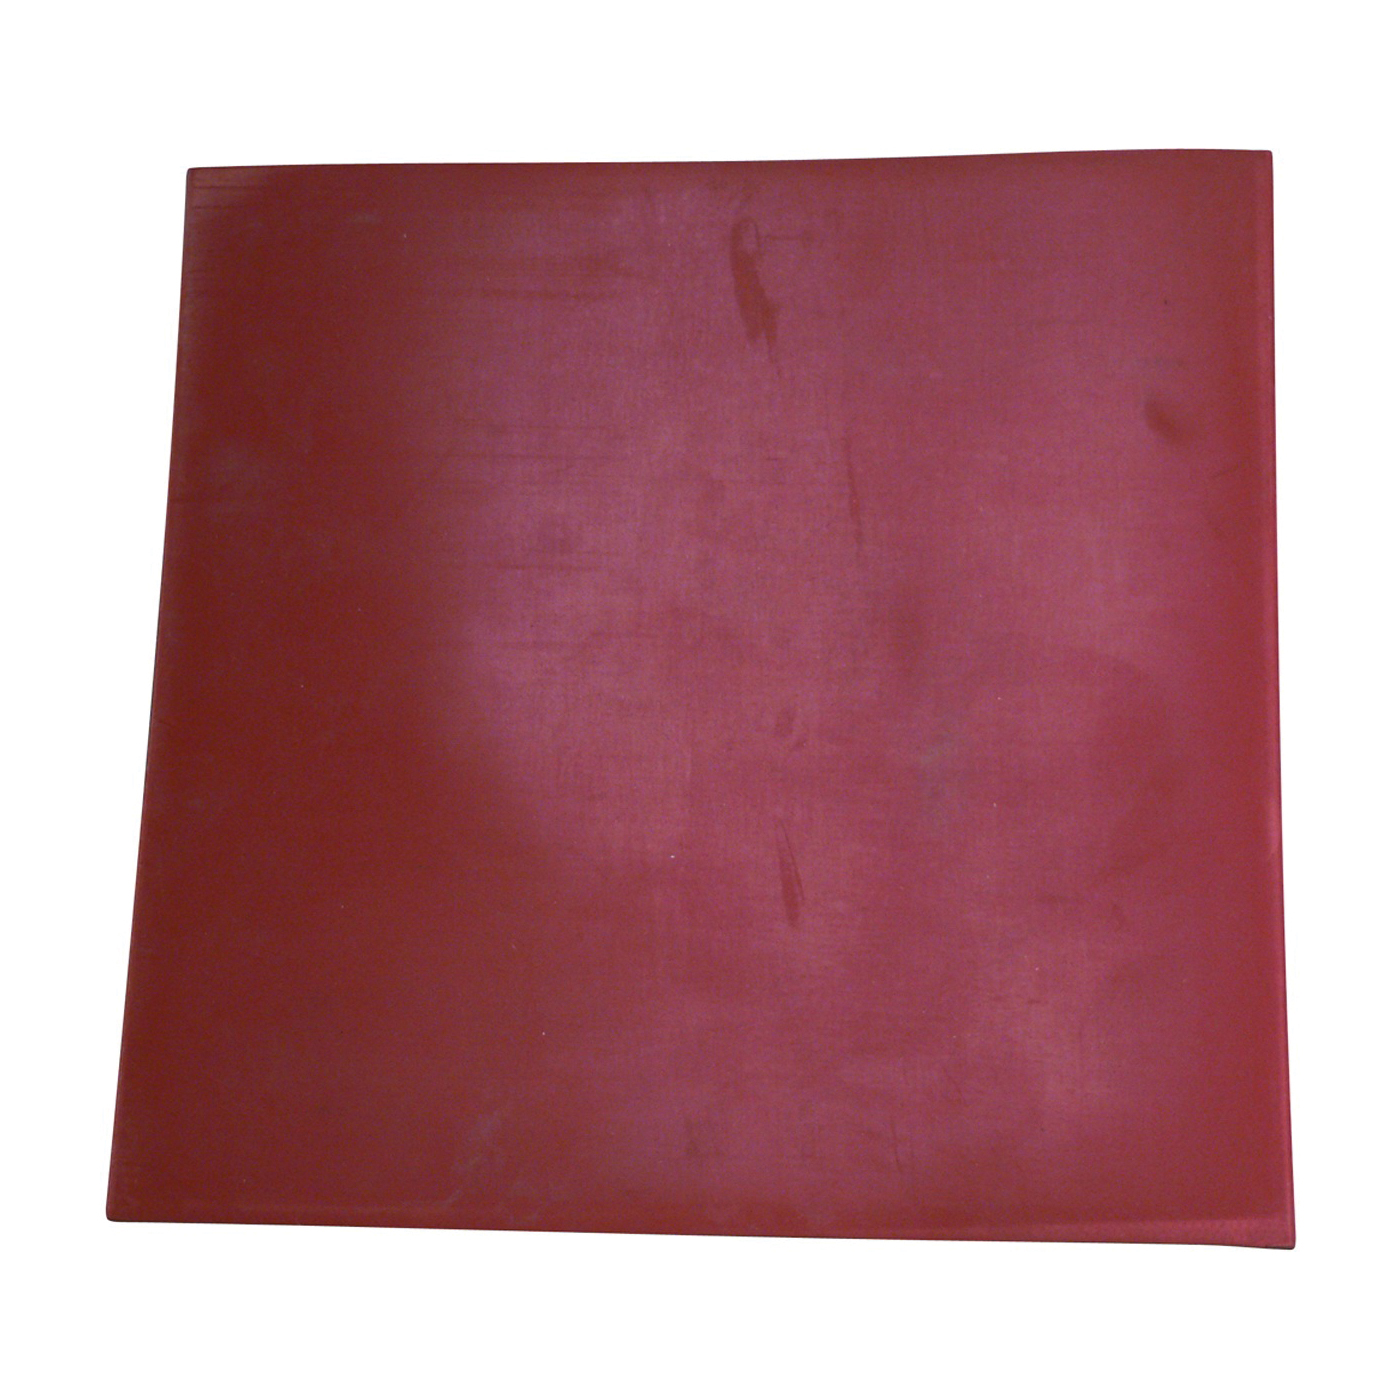 Plumb Pak PP855-41 Sheet Packing, Individual, Square, Rubber, Red